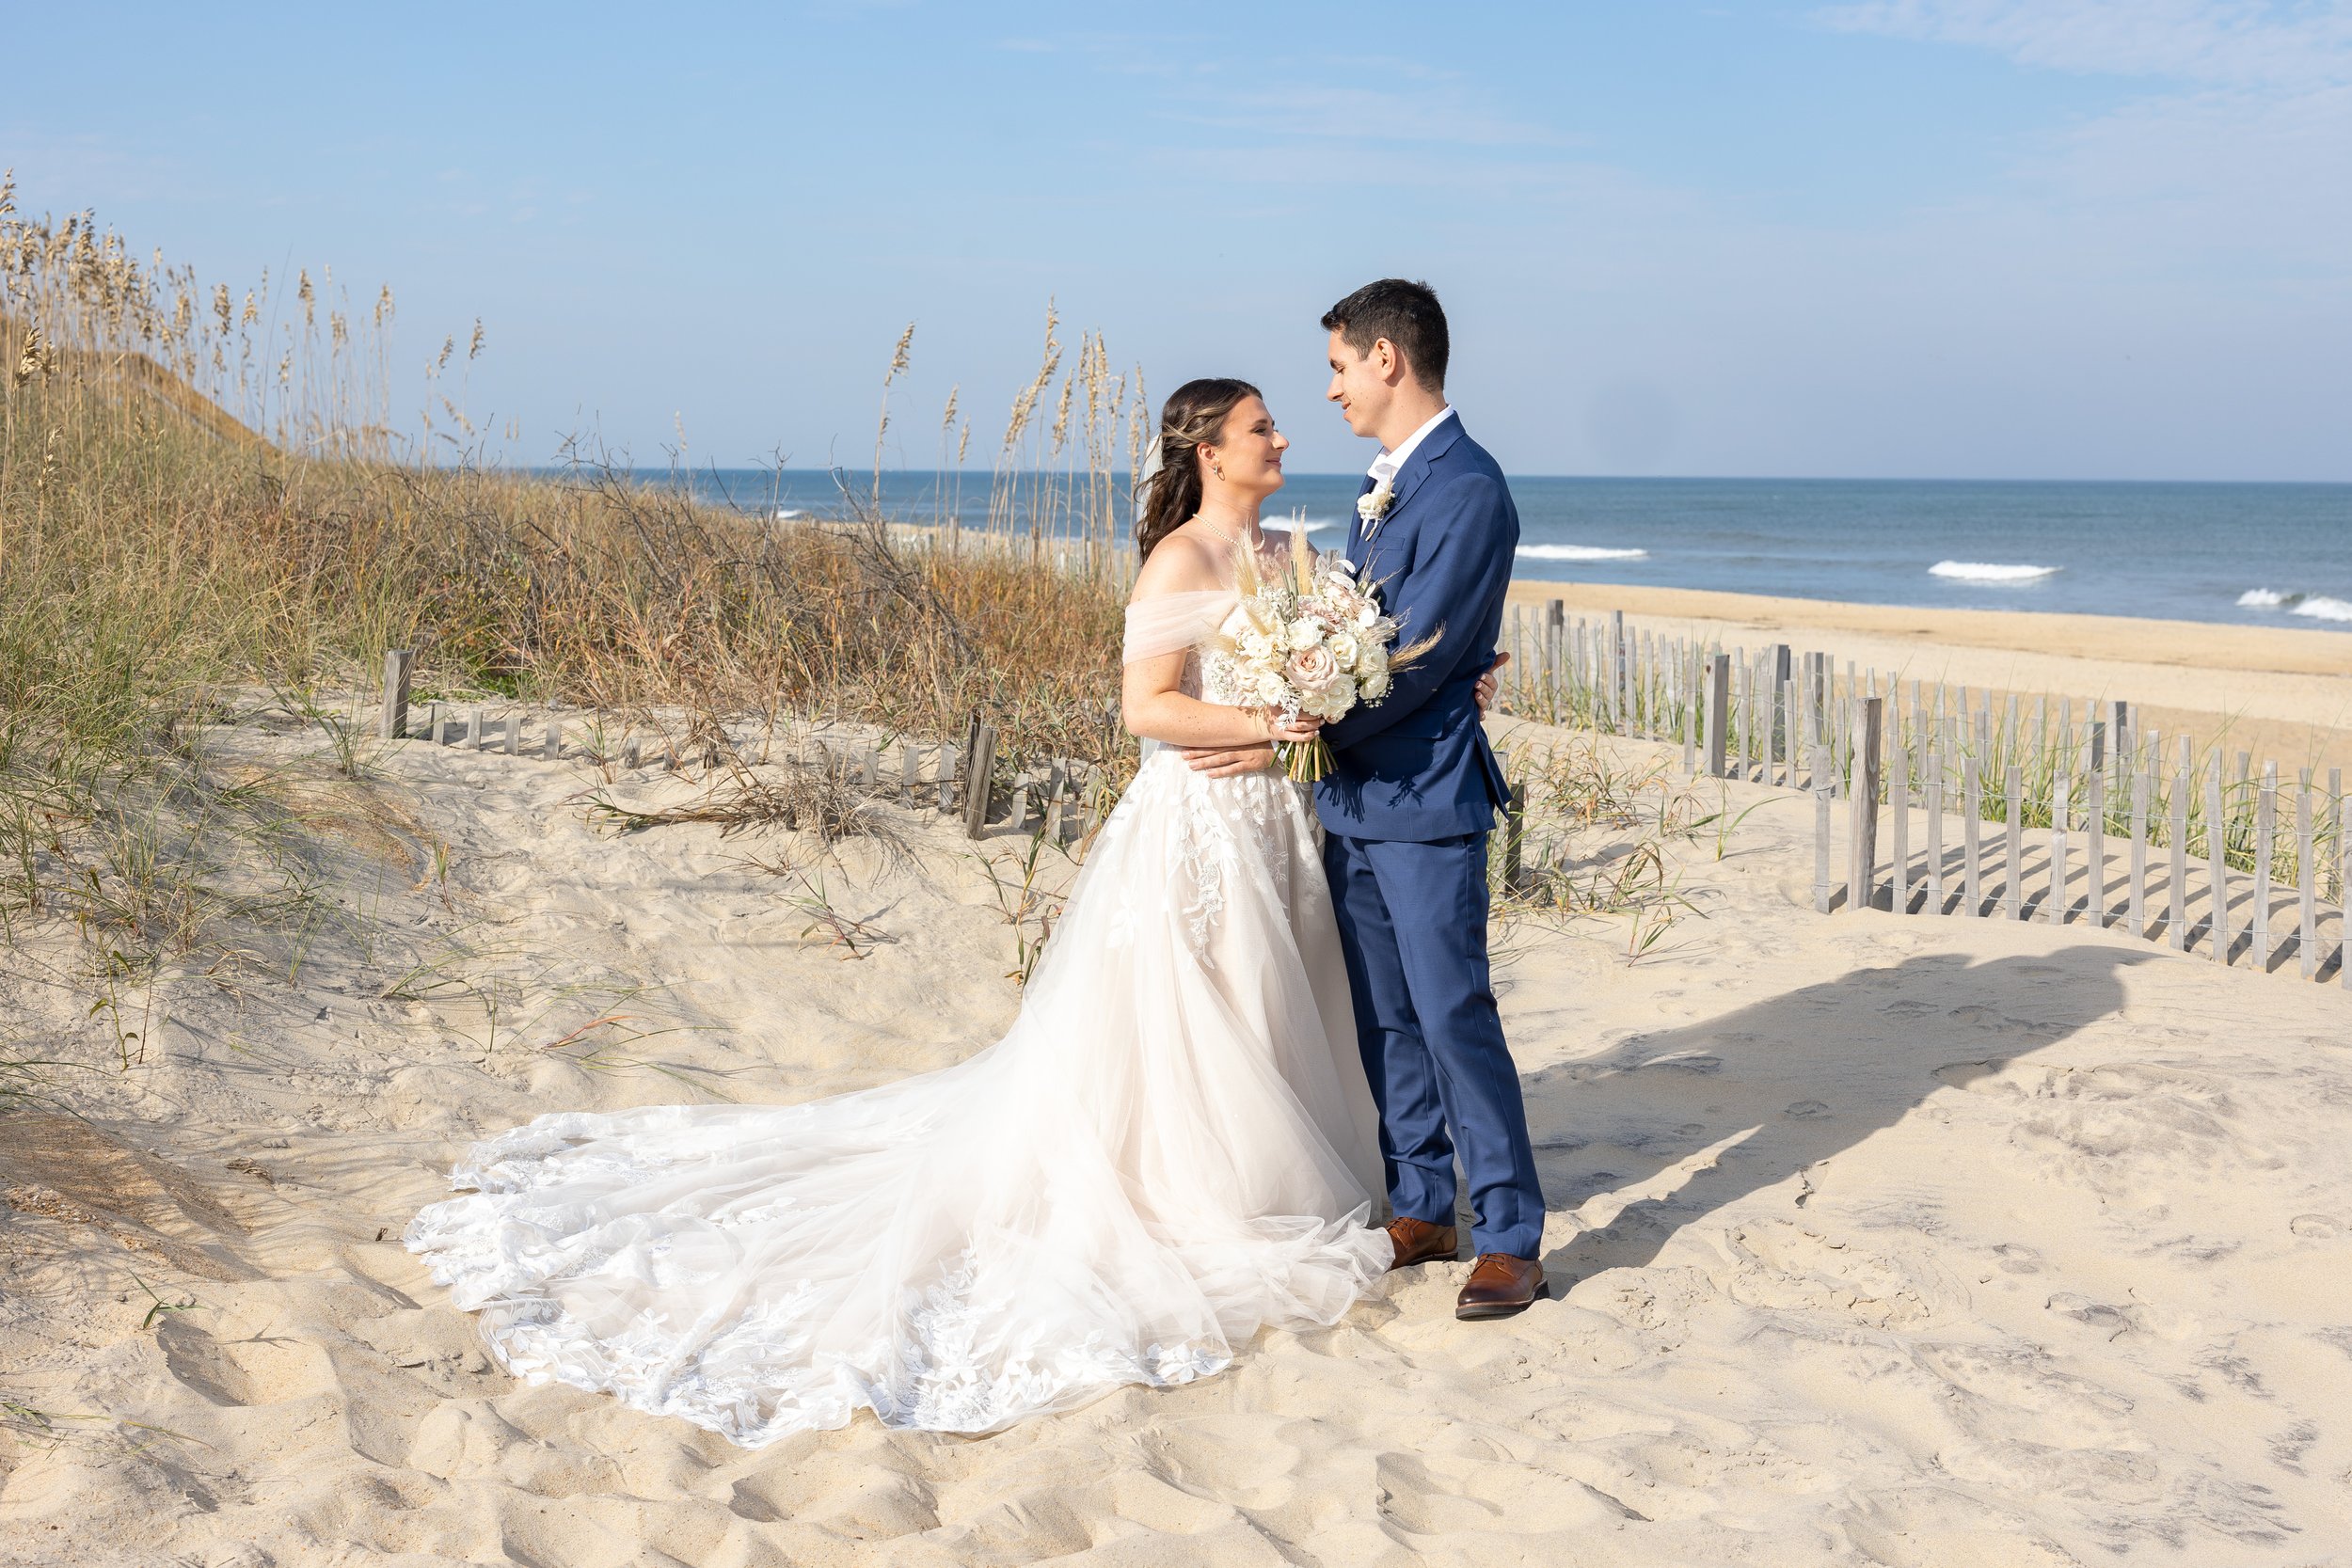 Bride and groom photos in sand on Kitty Hawk Pier wedding photos